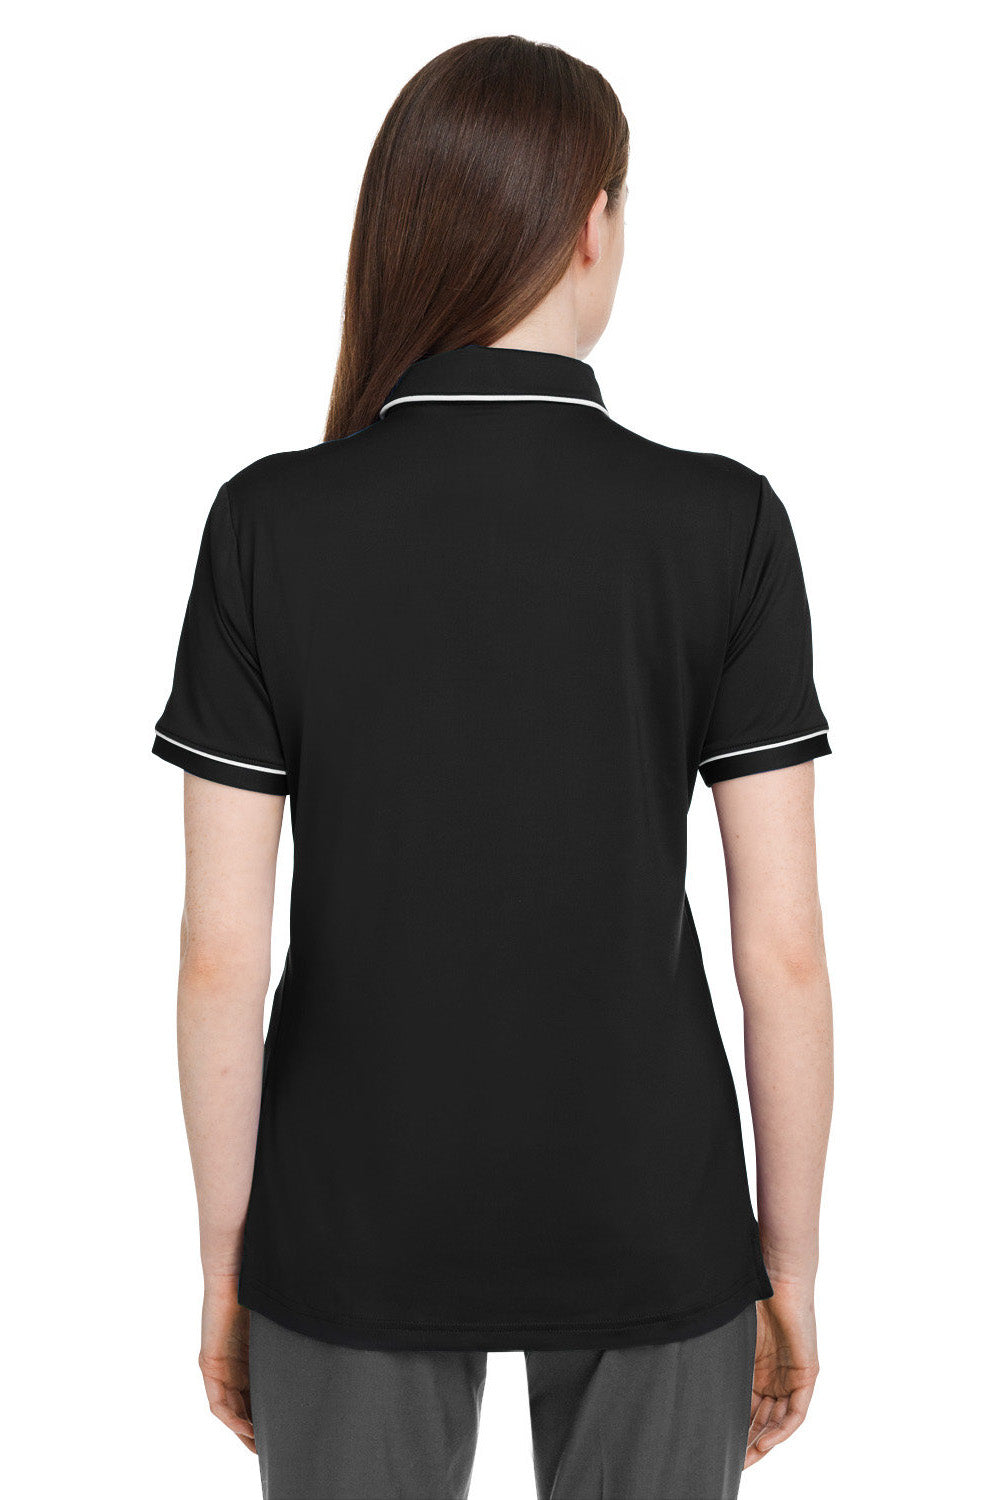 Under Armour 1376905 Womens Teams Performance Moisture Wicking Short Sleeve Polo Shirt Black Model Back